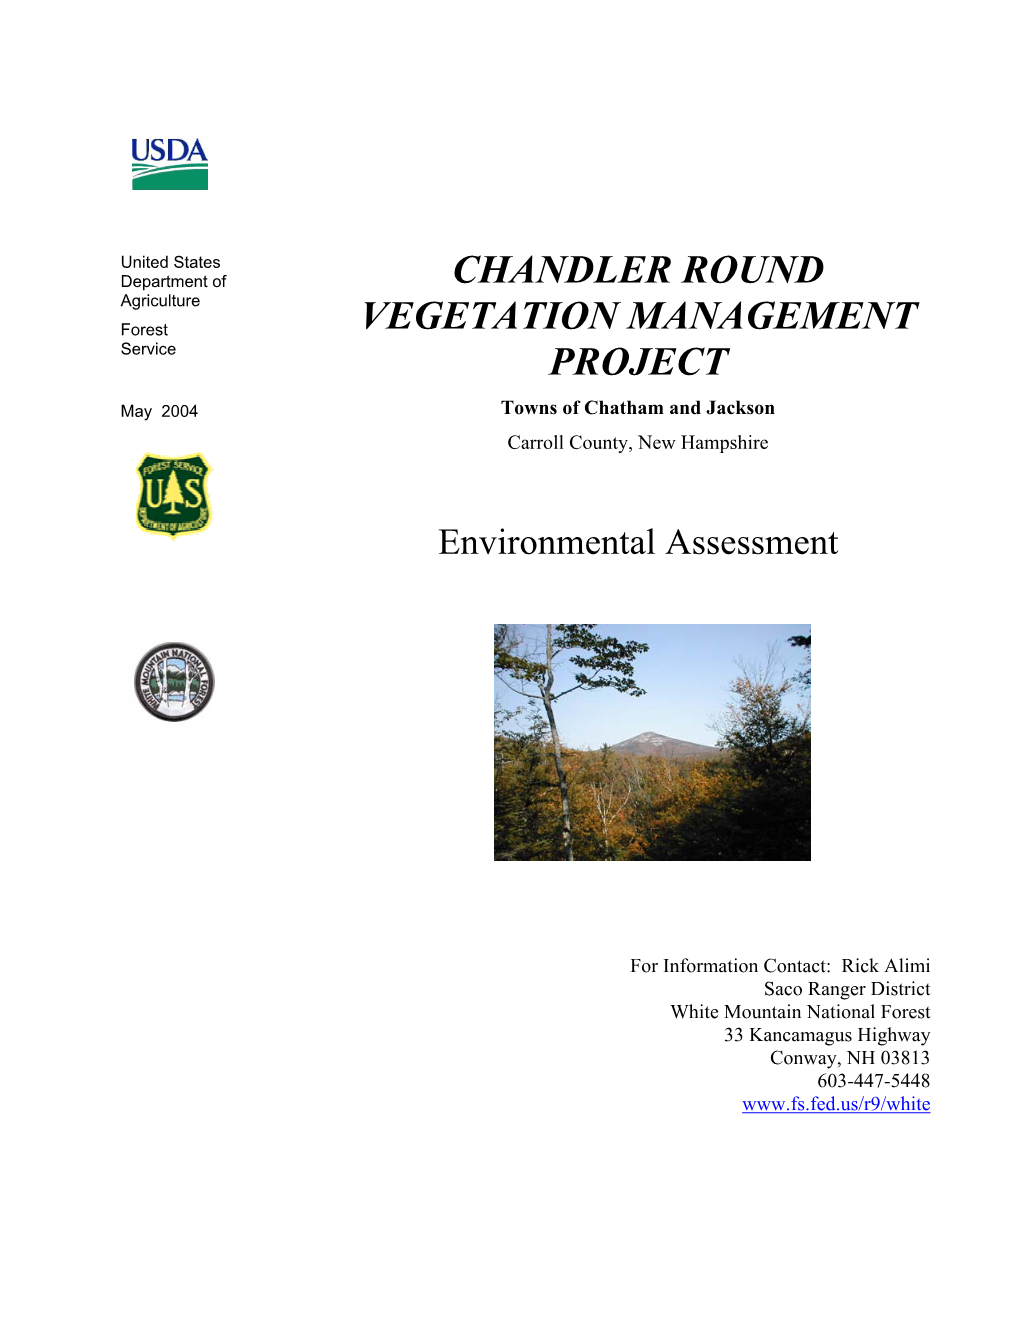 Chandler Round Vegetation Management Project